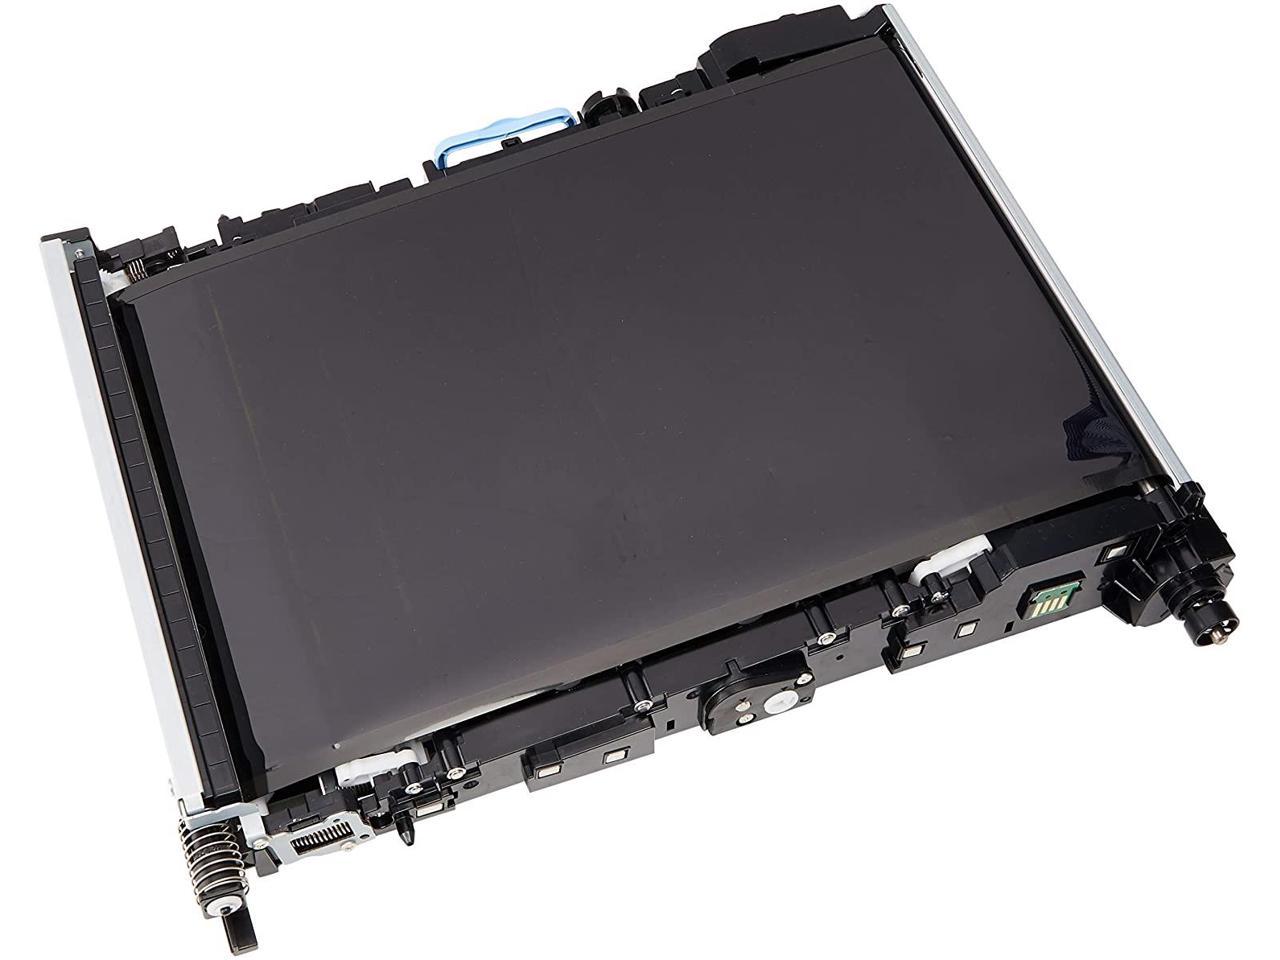 Dell U164N Imaging Transfer Belt and Roller Kit